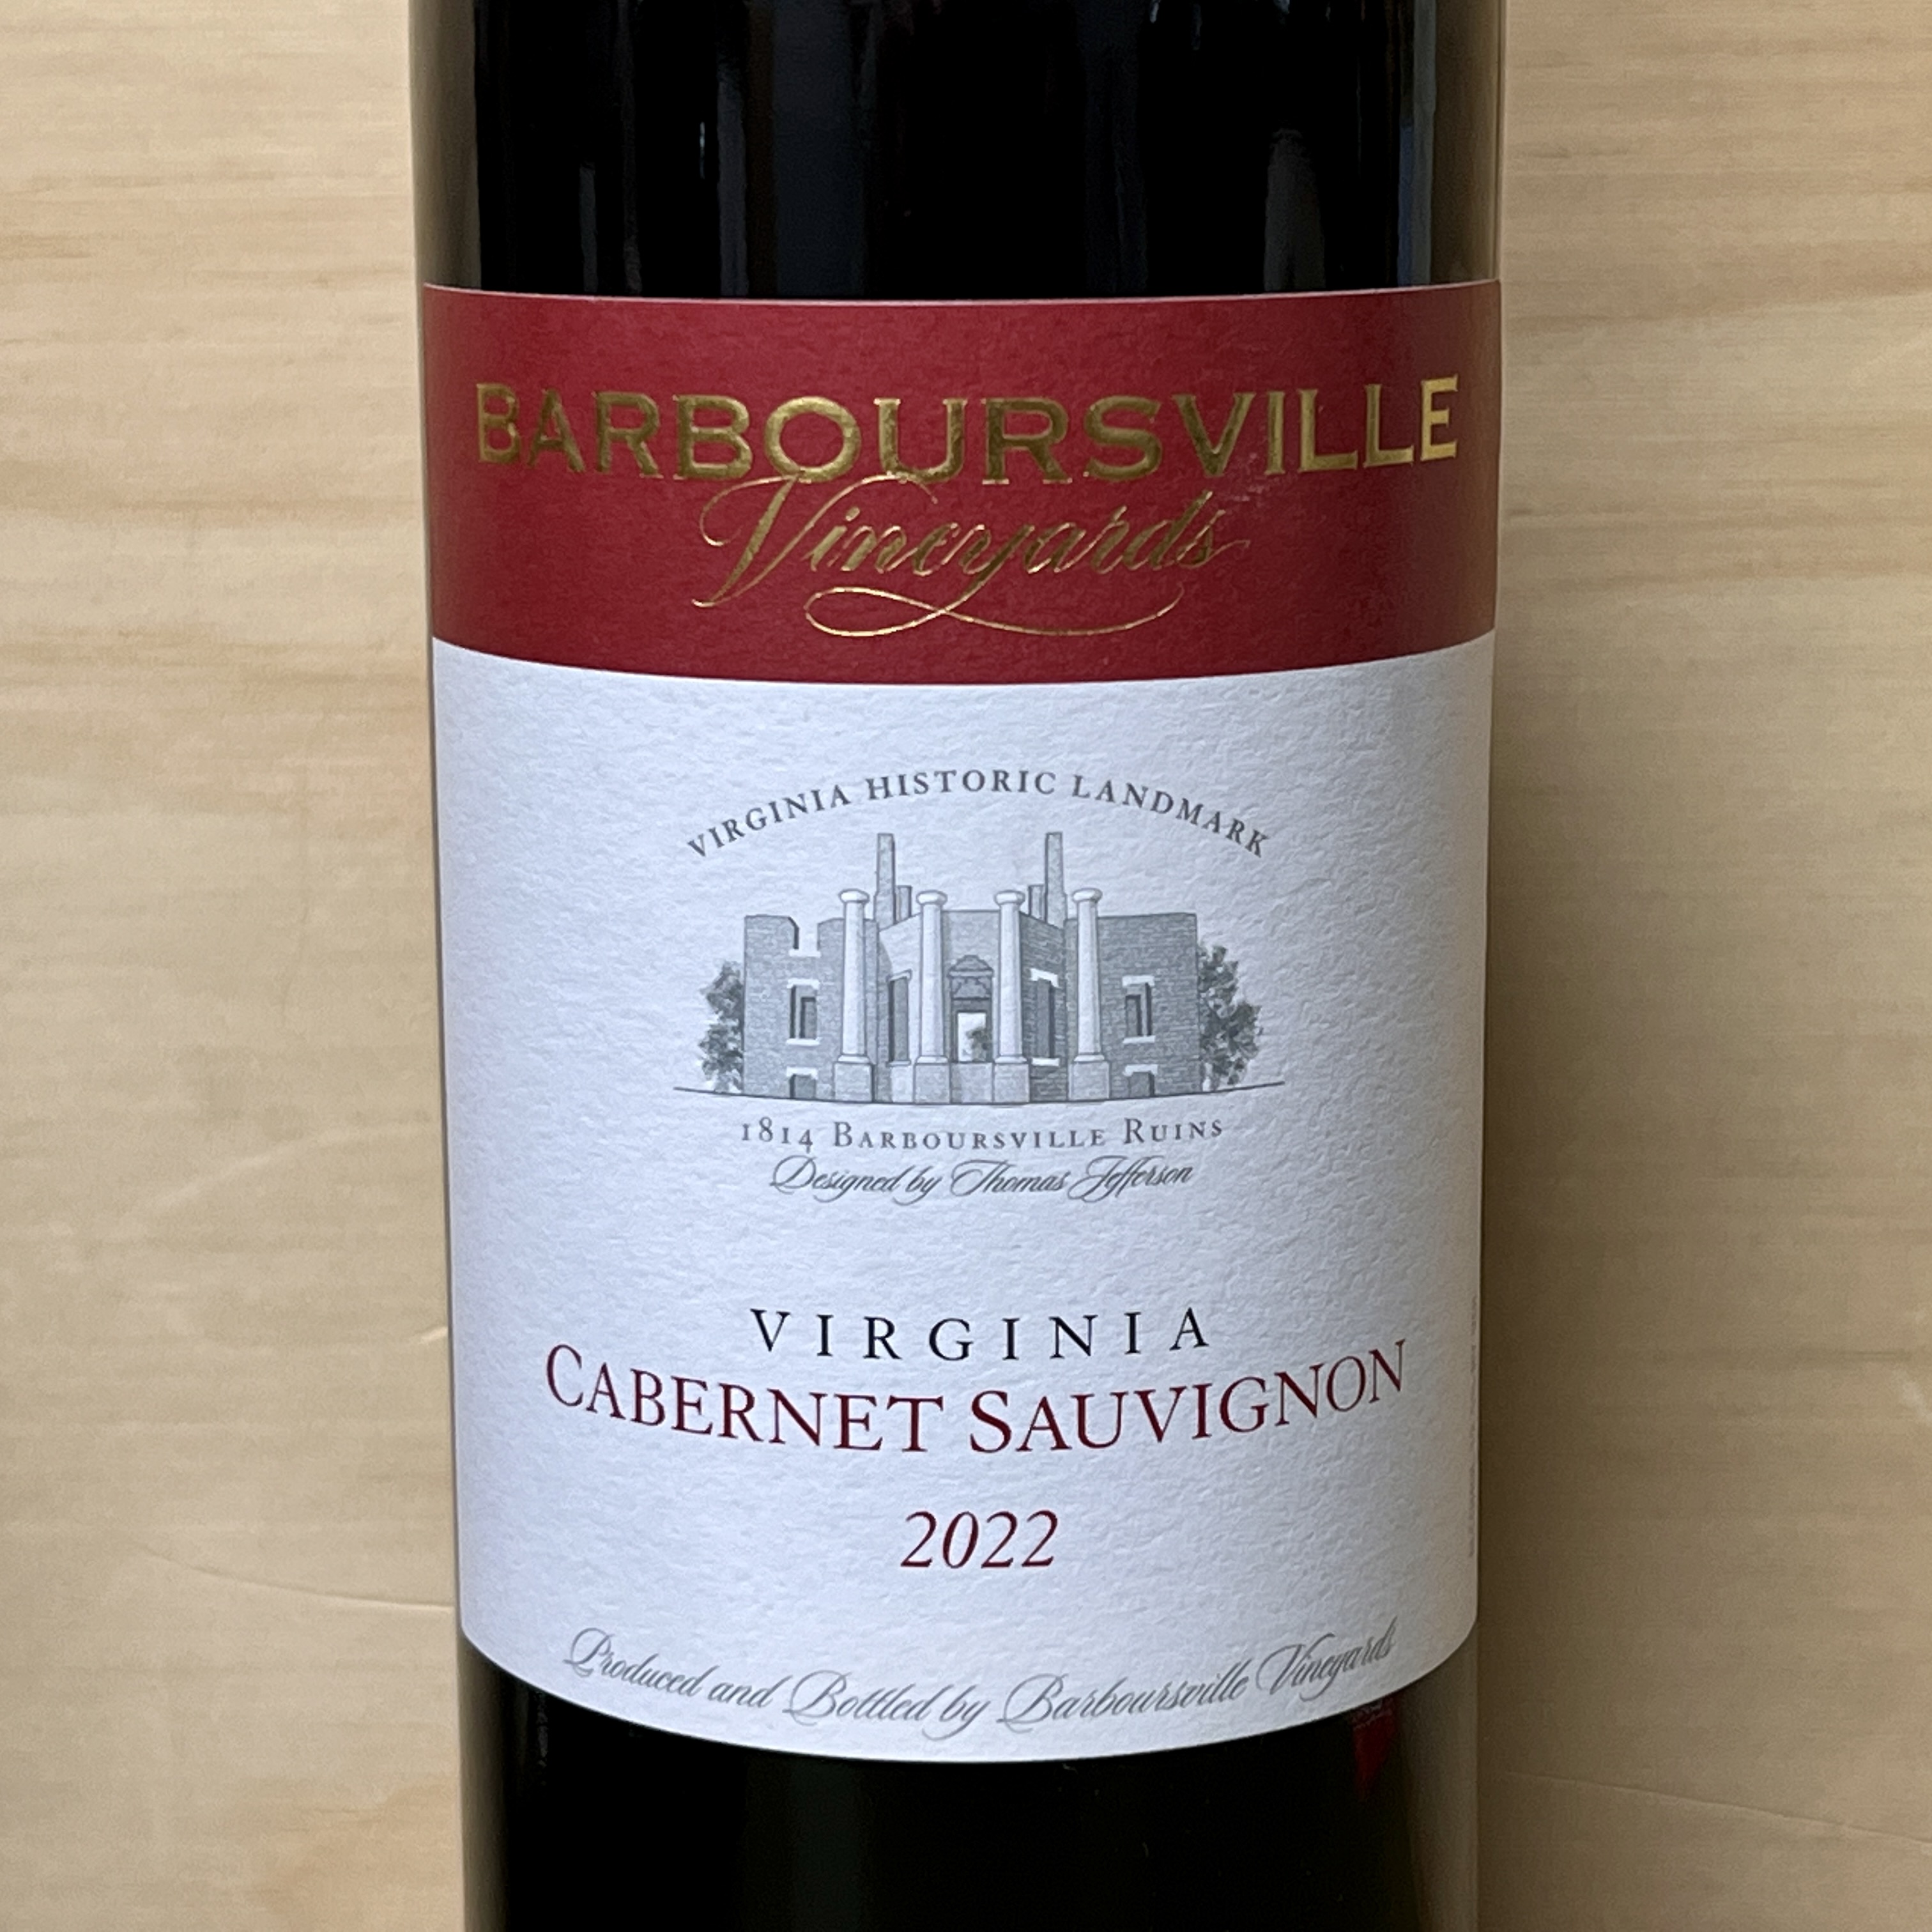 Barboursville Vineyards Cabernet Sauvignon 2022